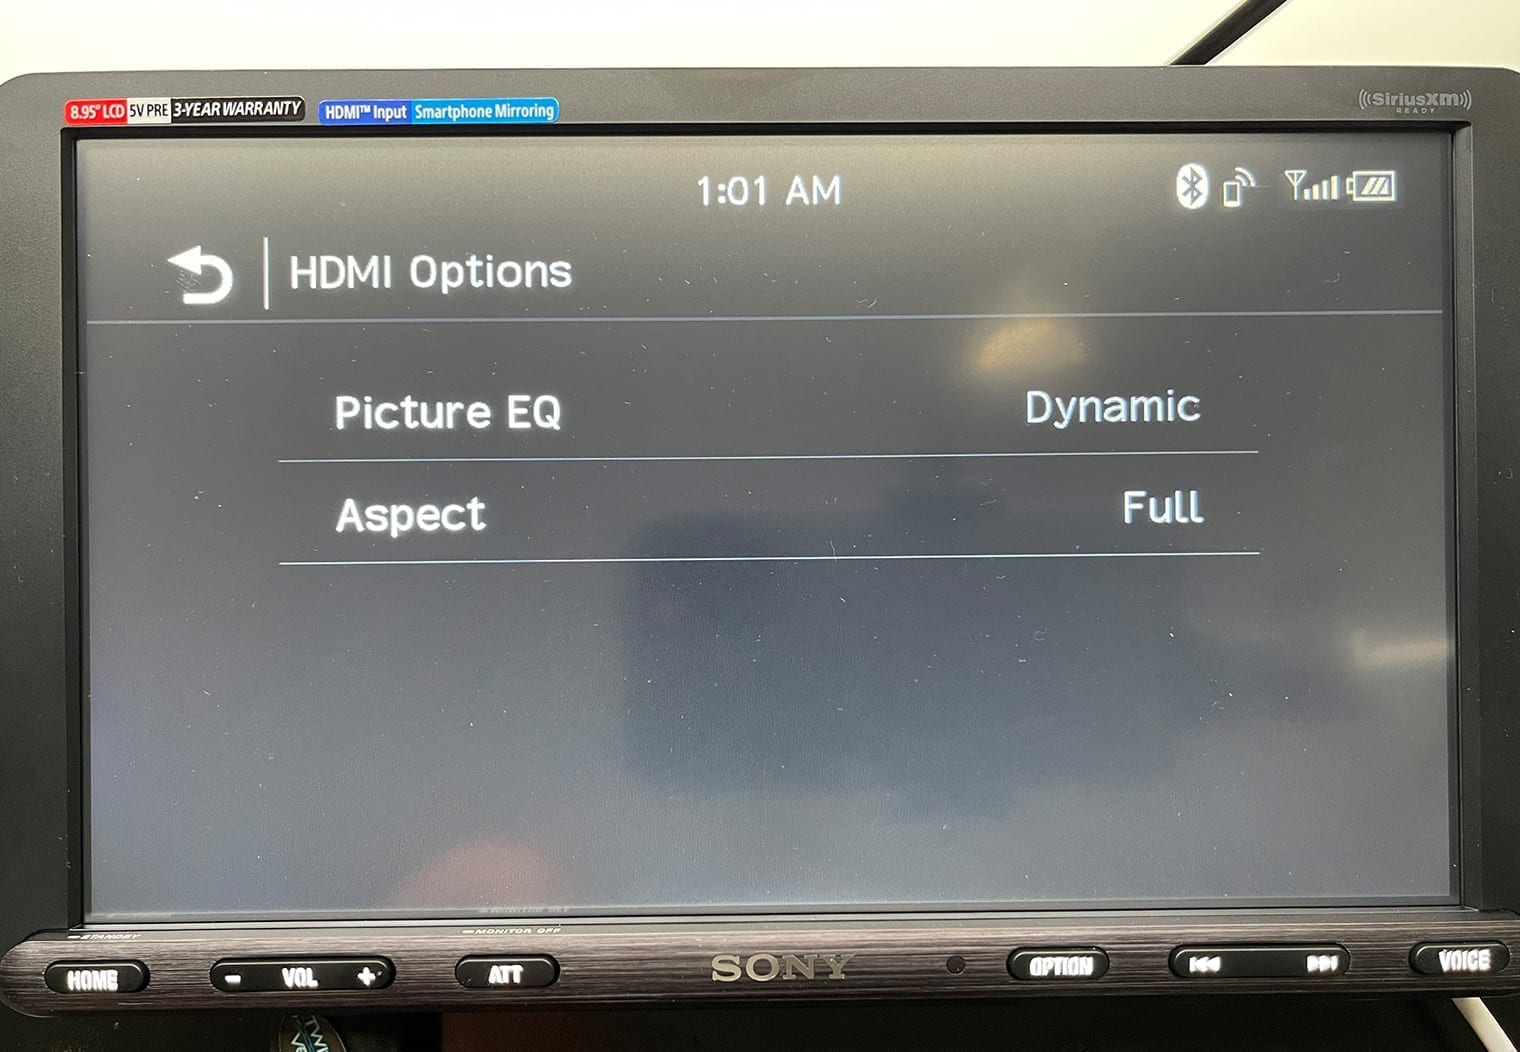 Sony XAV-AX8100 HDMI Options